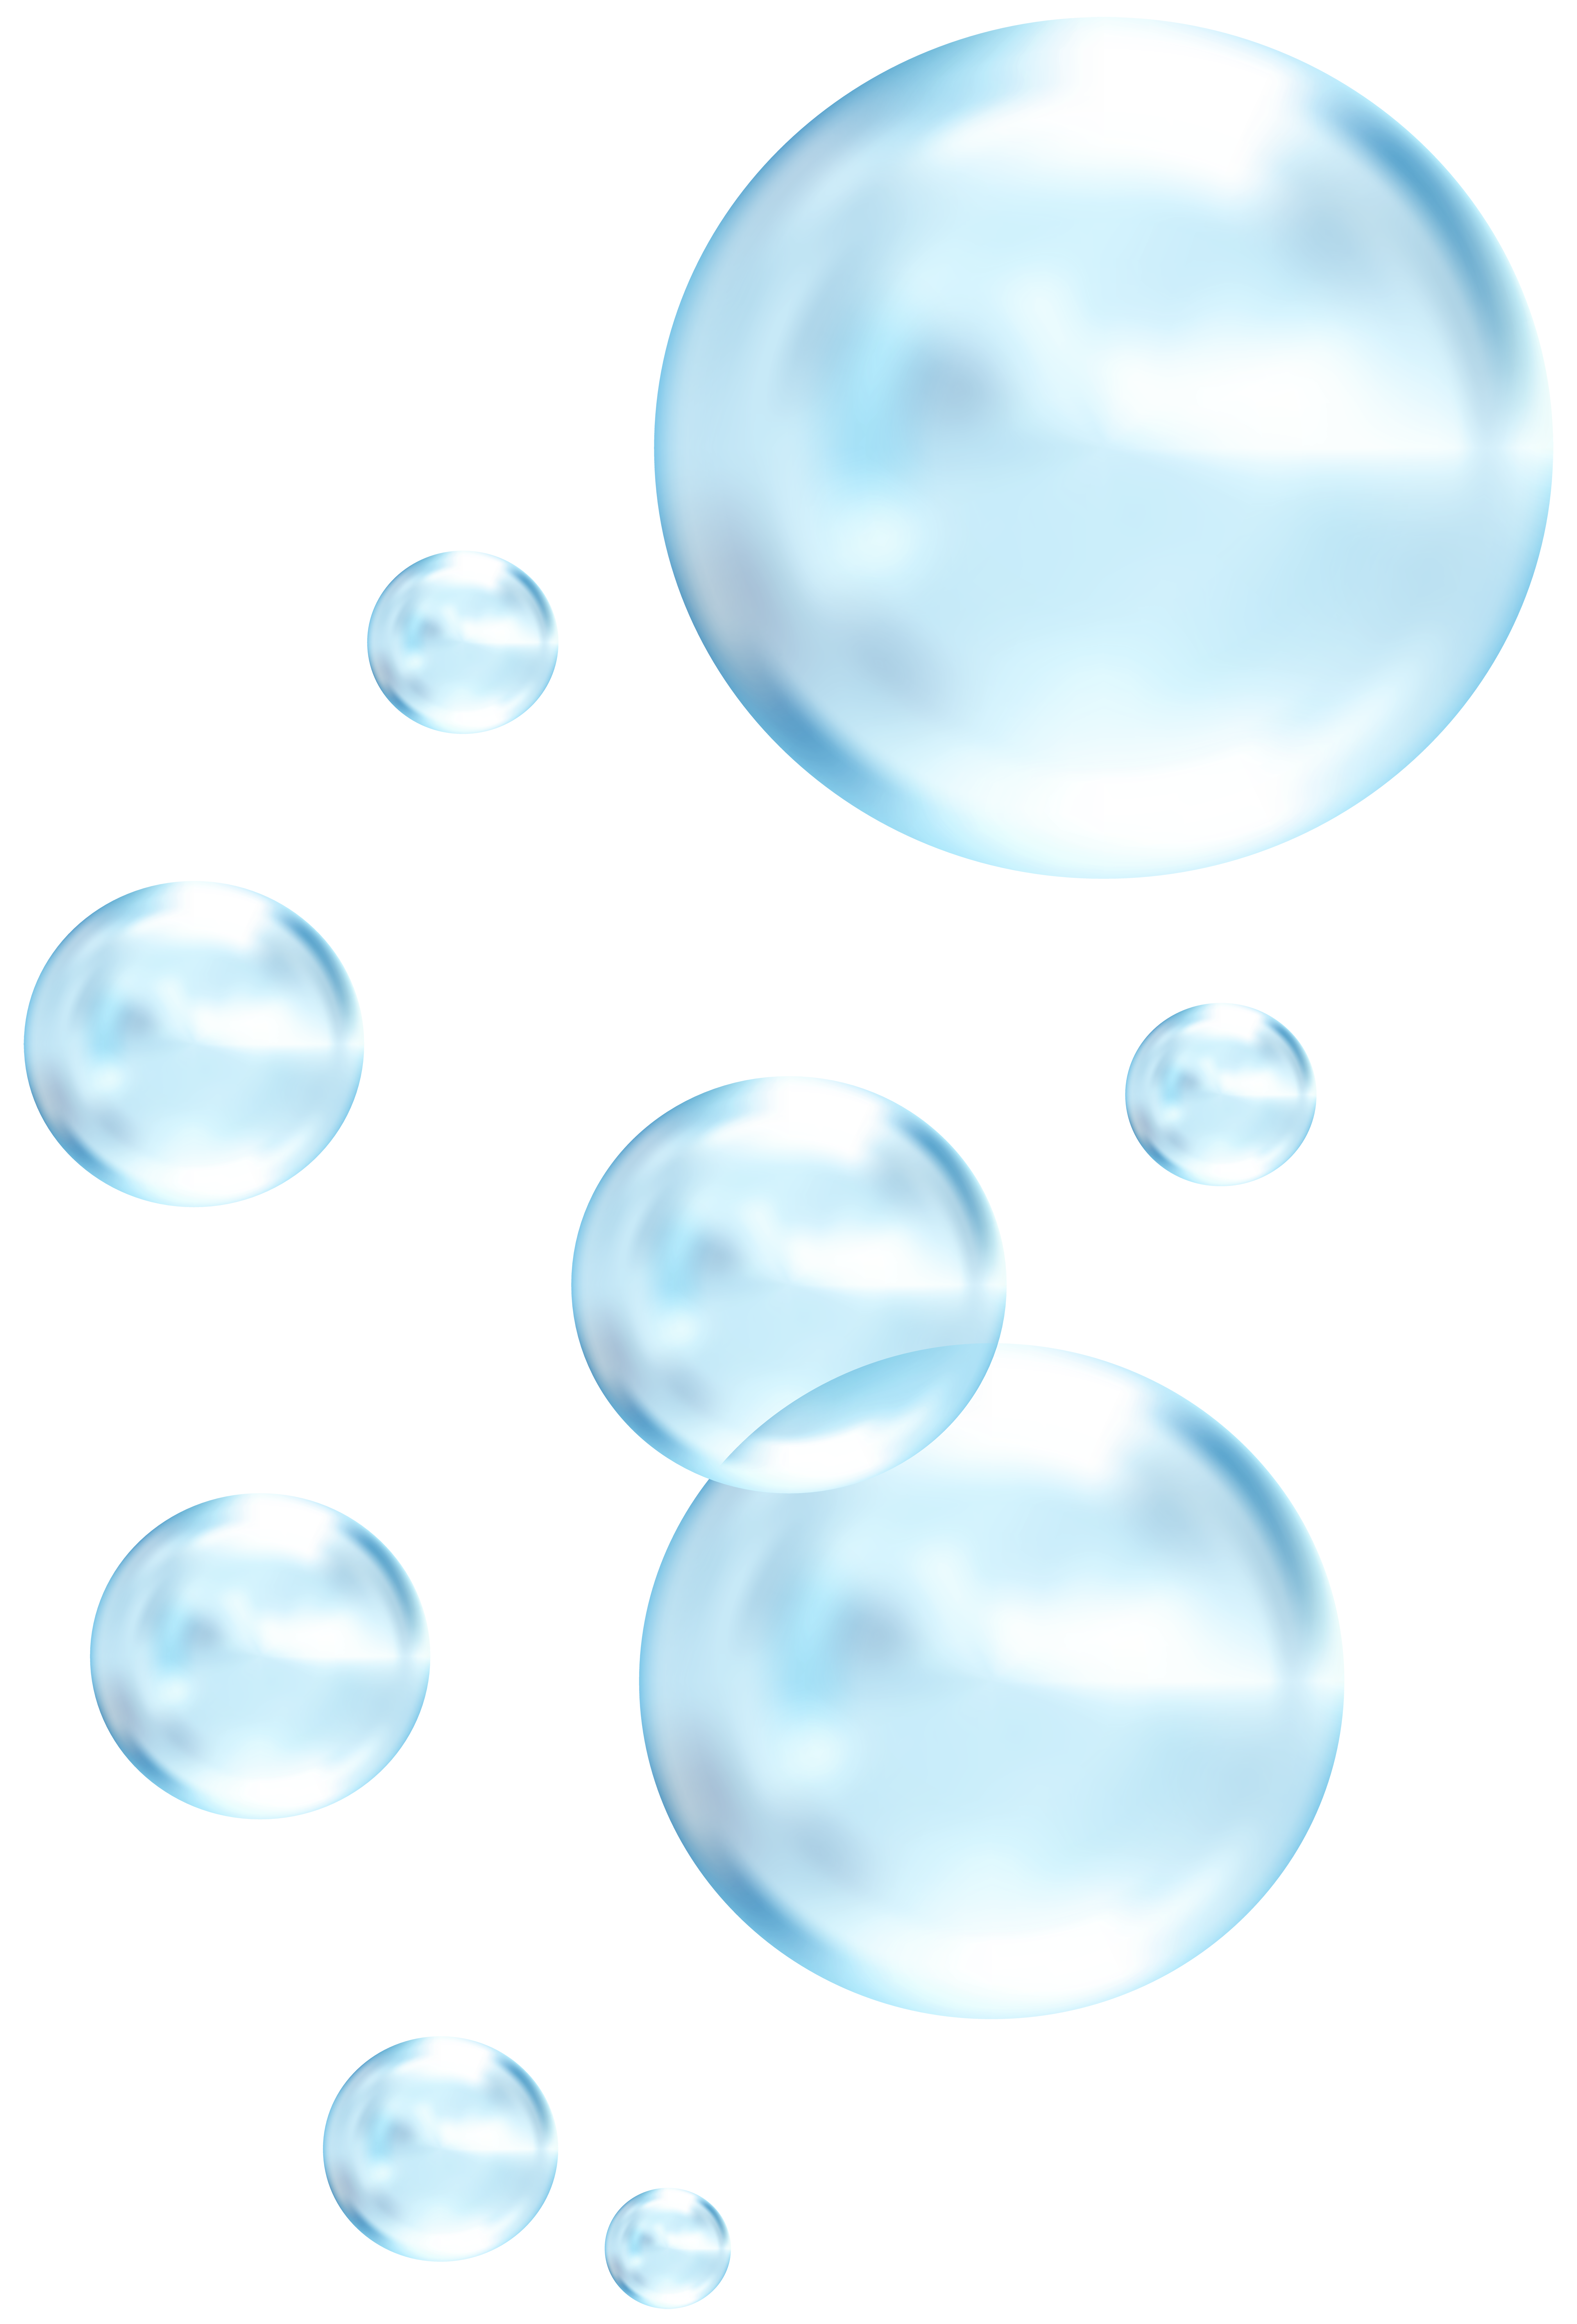 Free Bubbles Png Images, Download Free Bubbles Png Images png